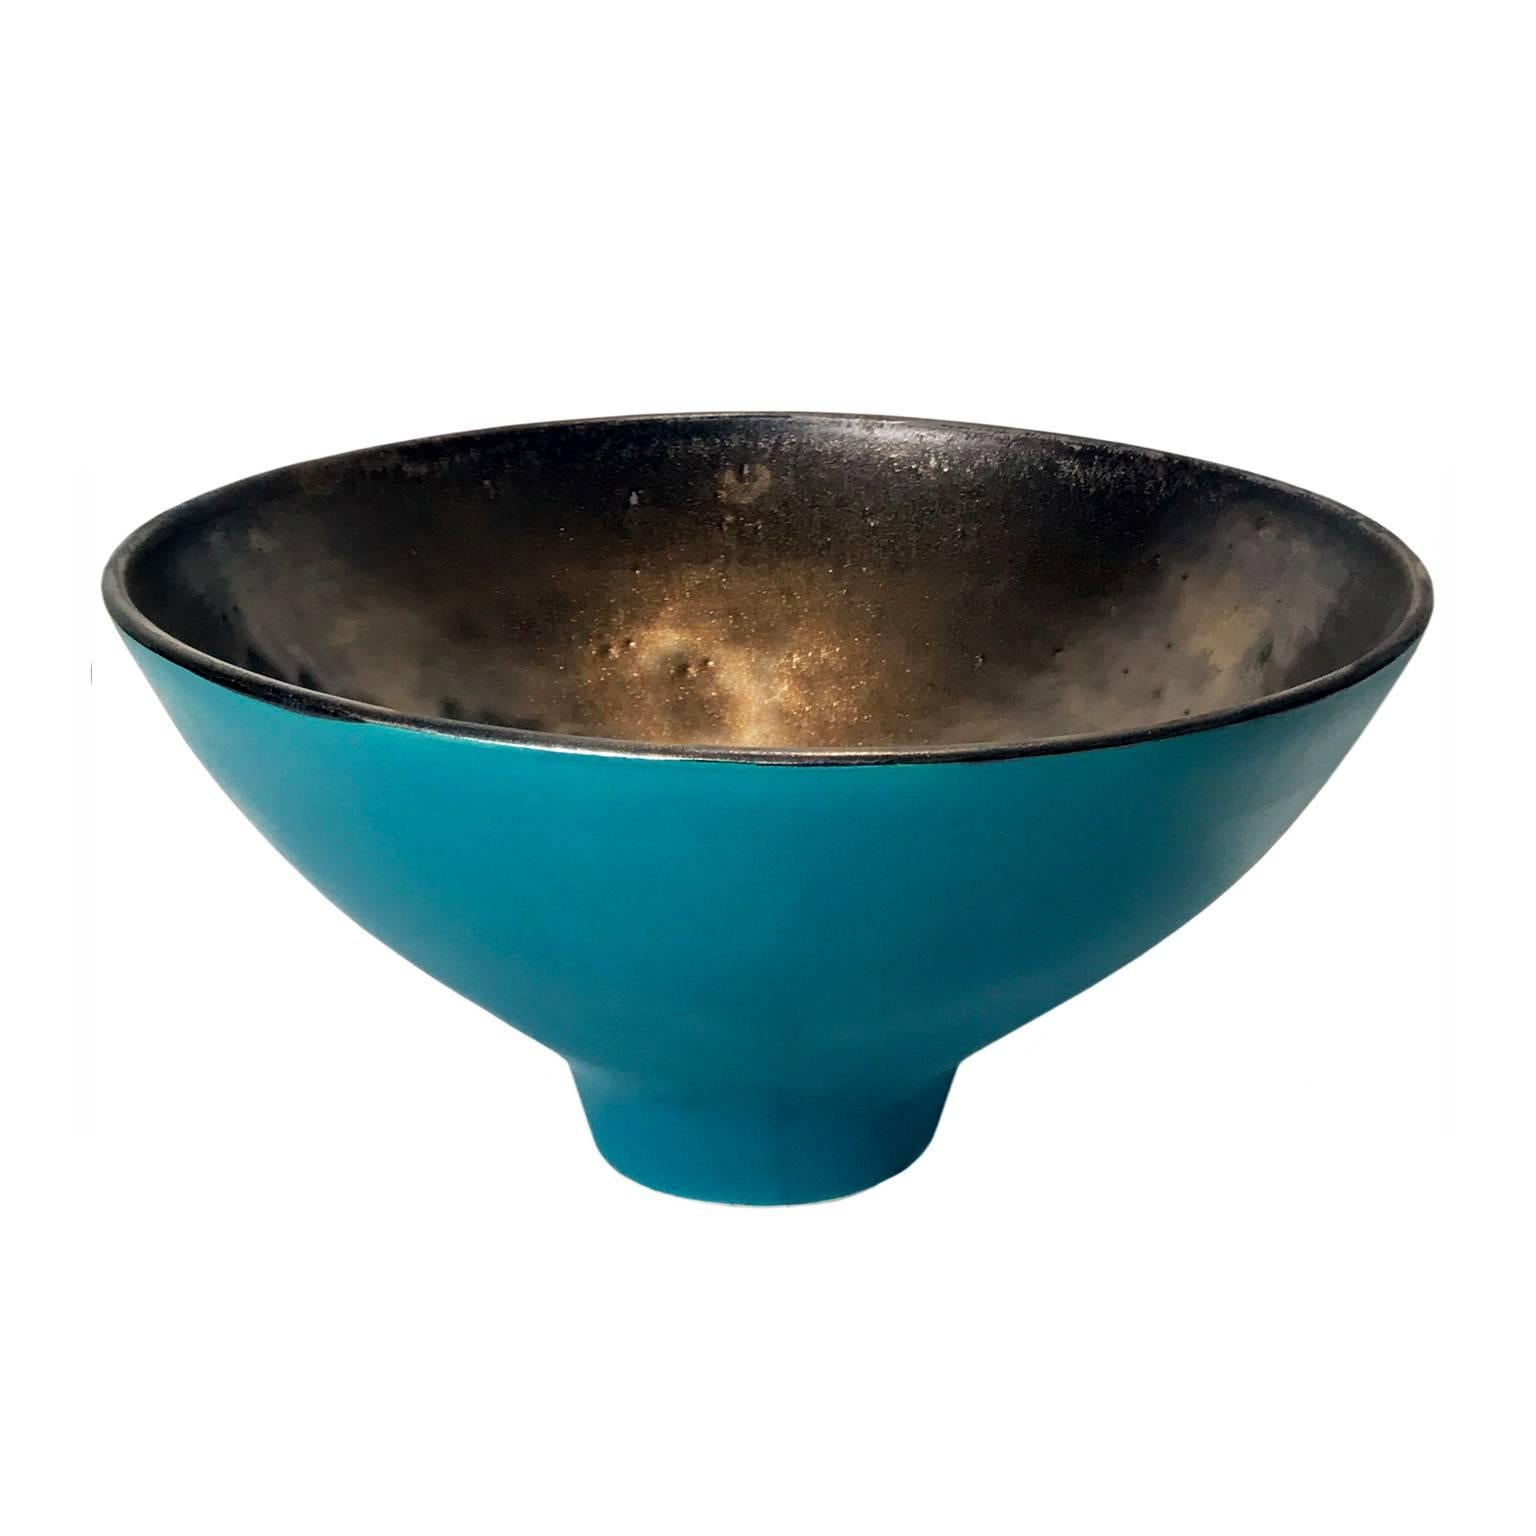 Tall Matte Turquoise Glaze Curved Ceramic Bowl by Sandi Fellman